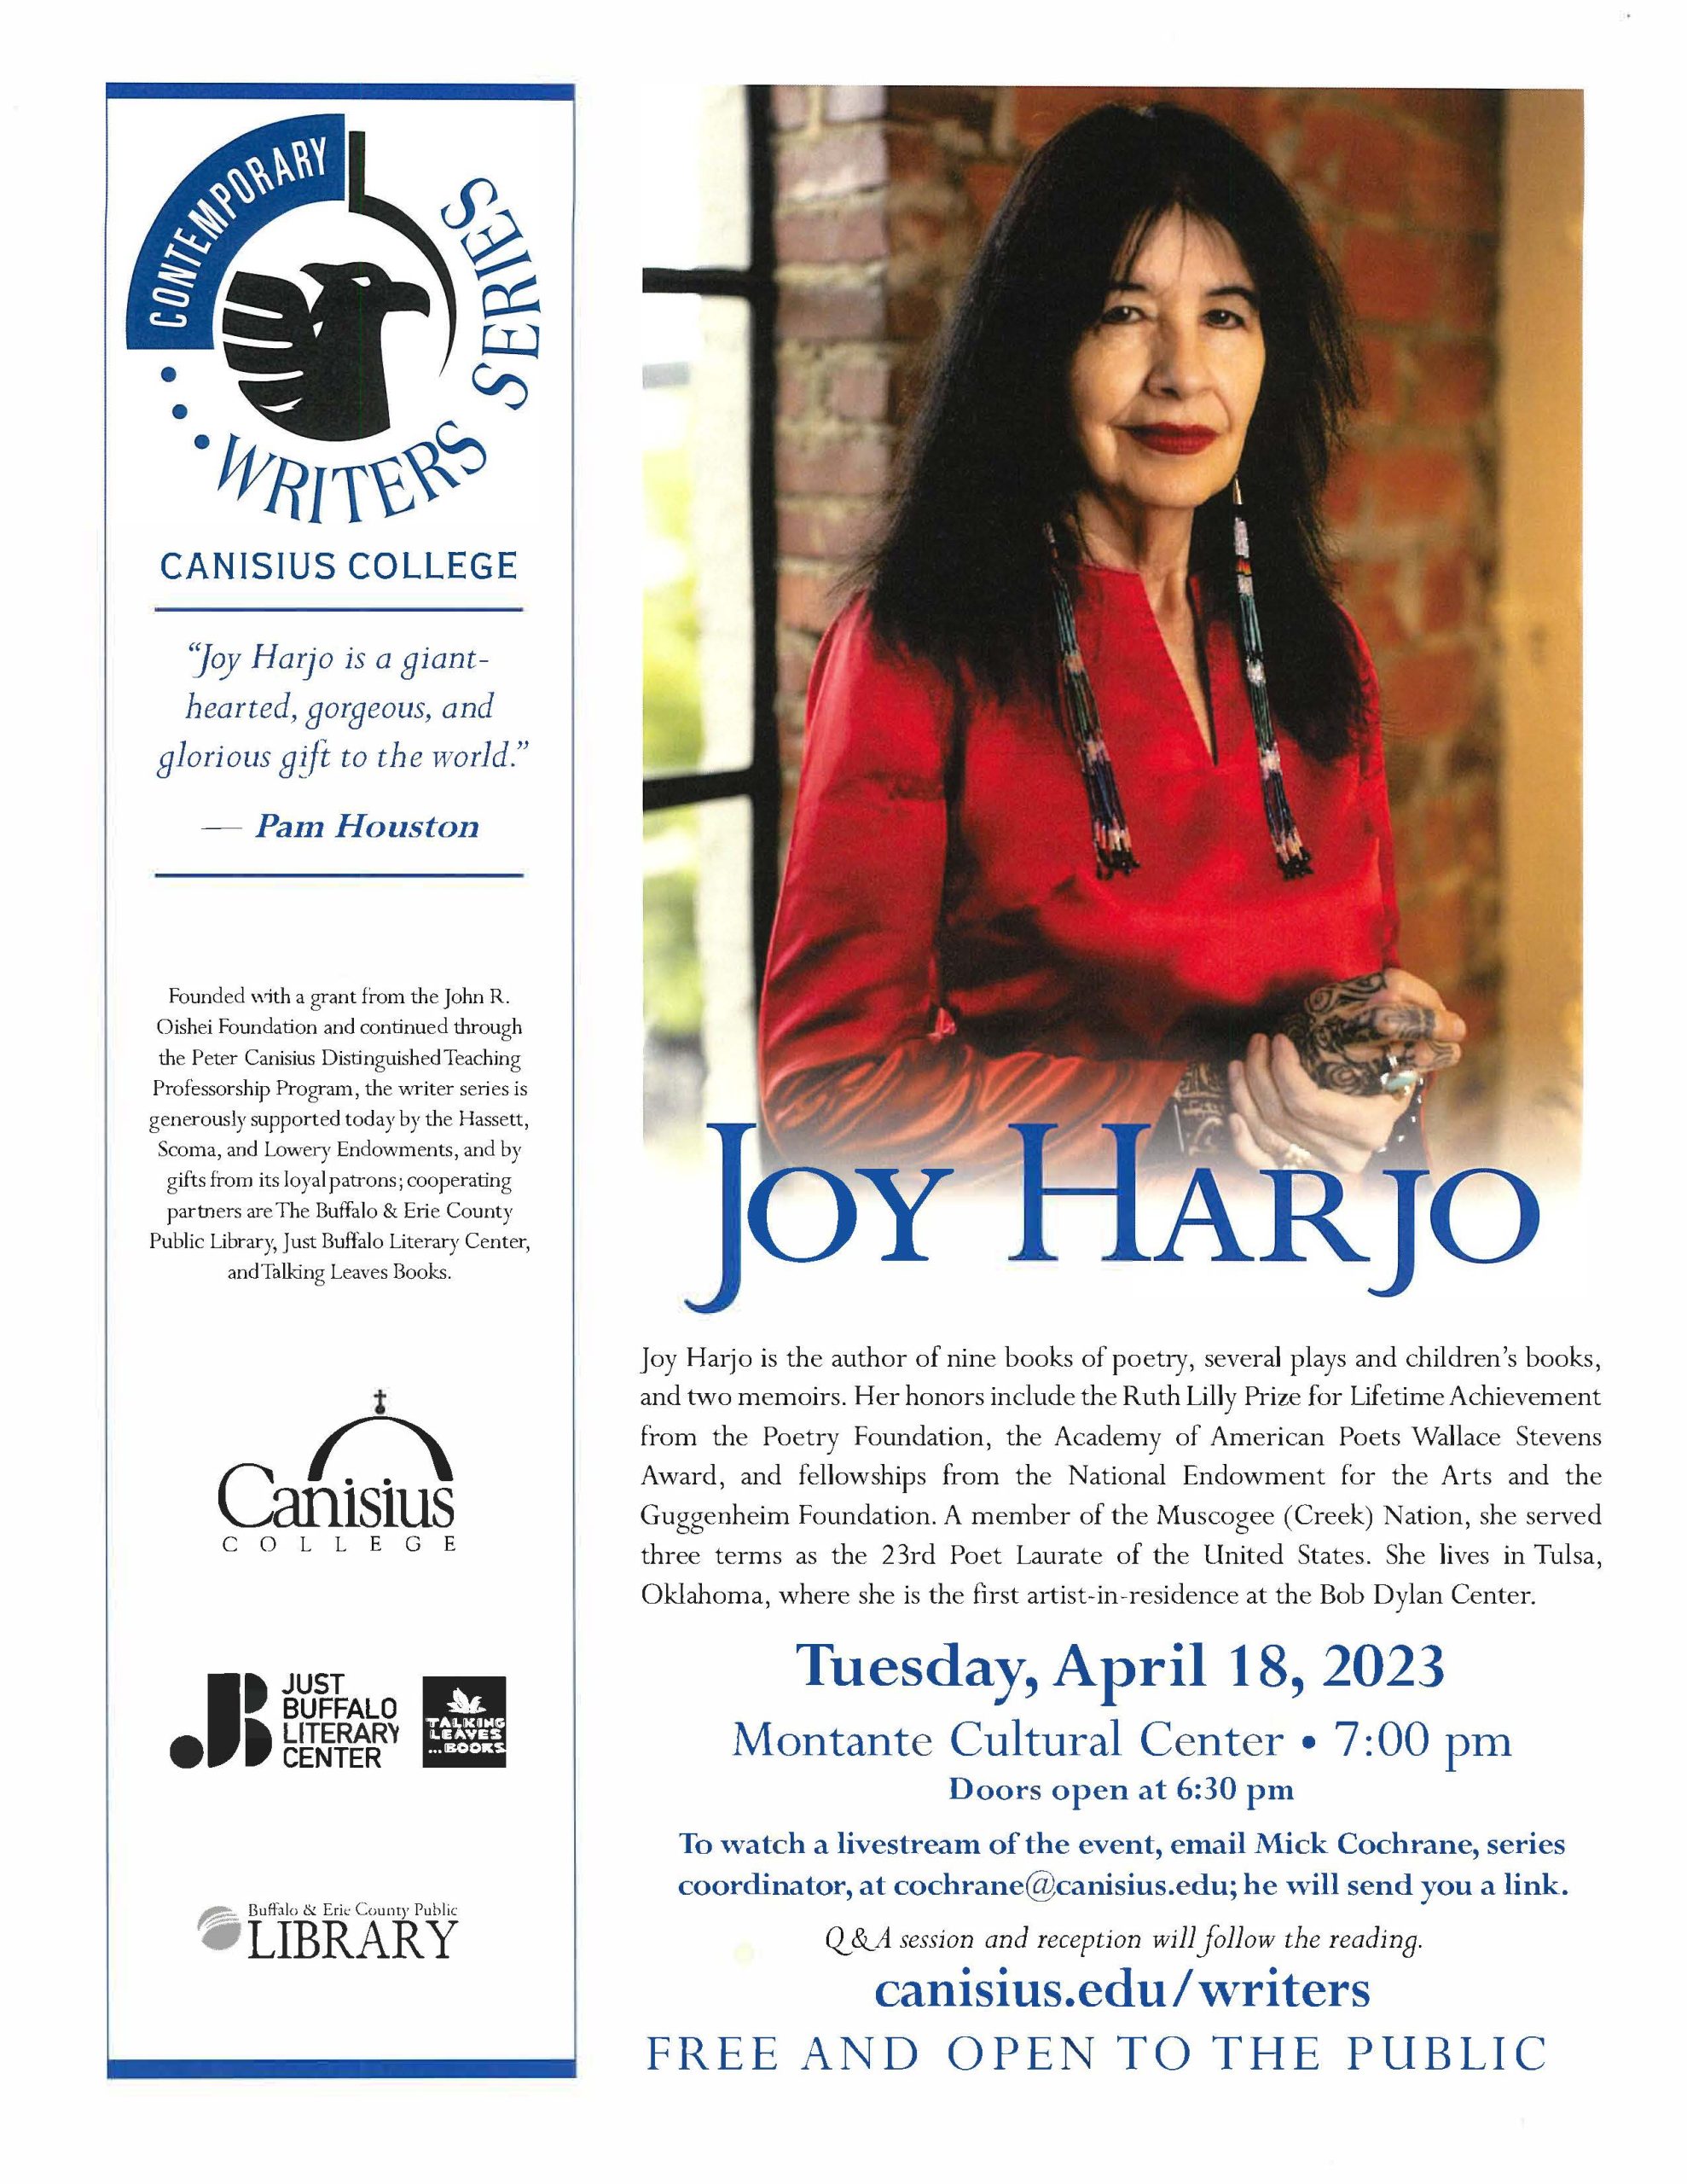 Joy Harjo at Canisius April 18, 2023